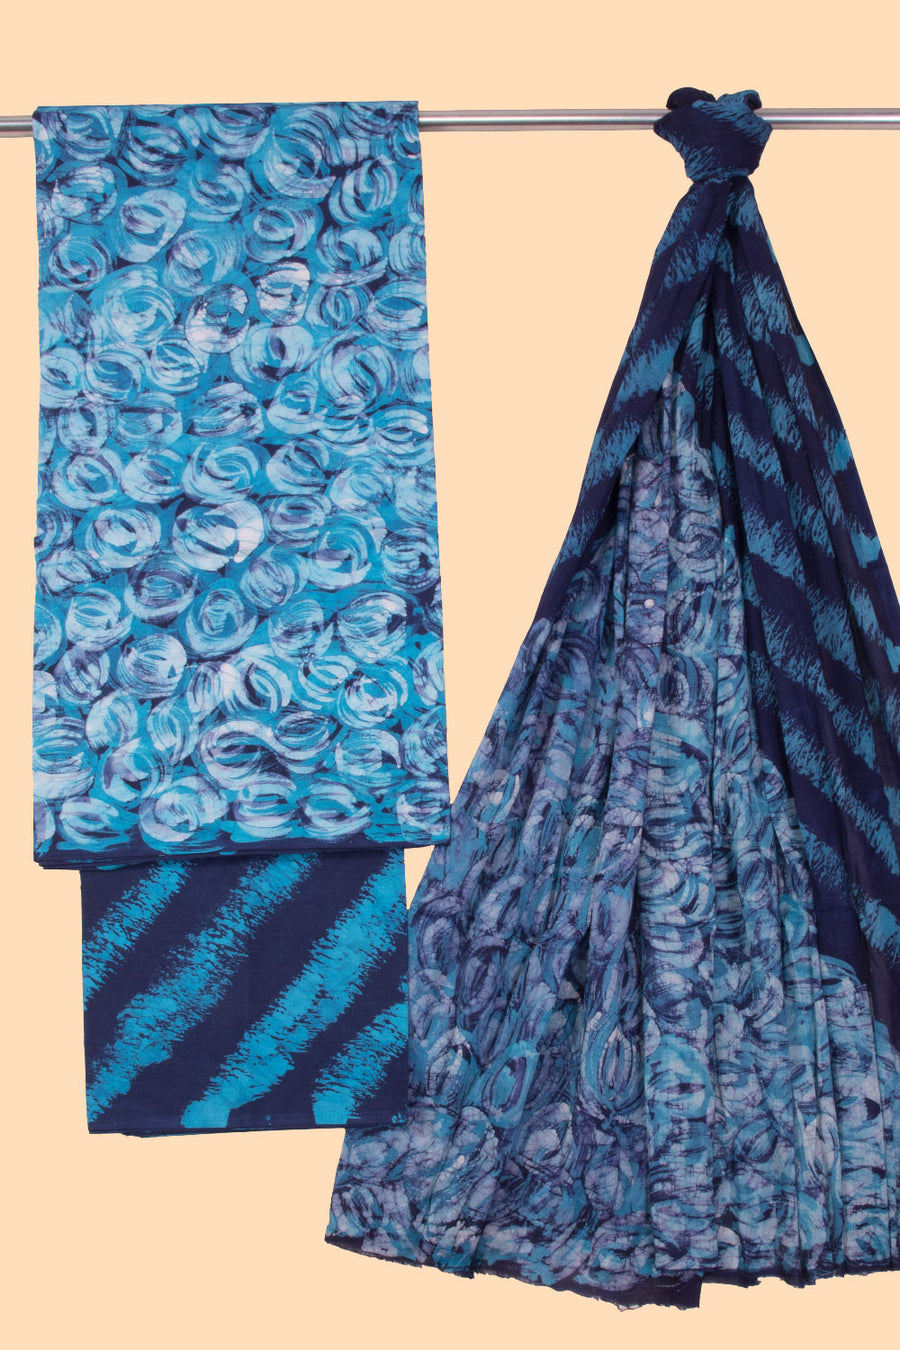 Dodger Blue Batik Cotton 3-Piece Salwar Suit Material -Avishya